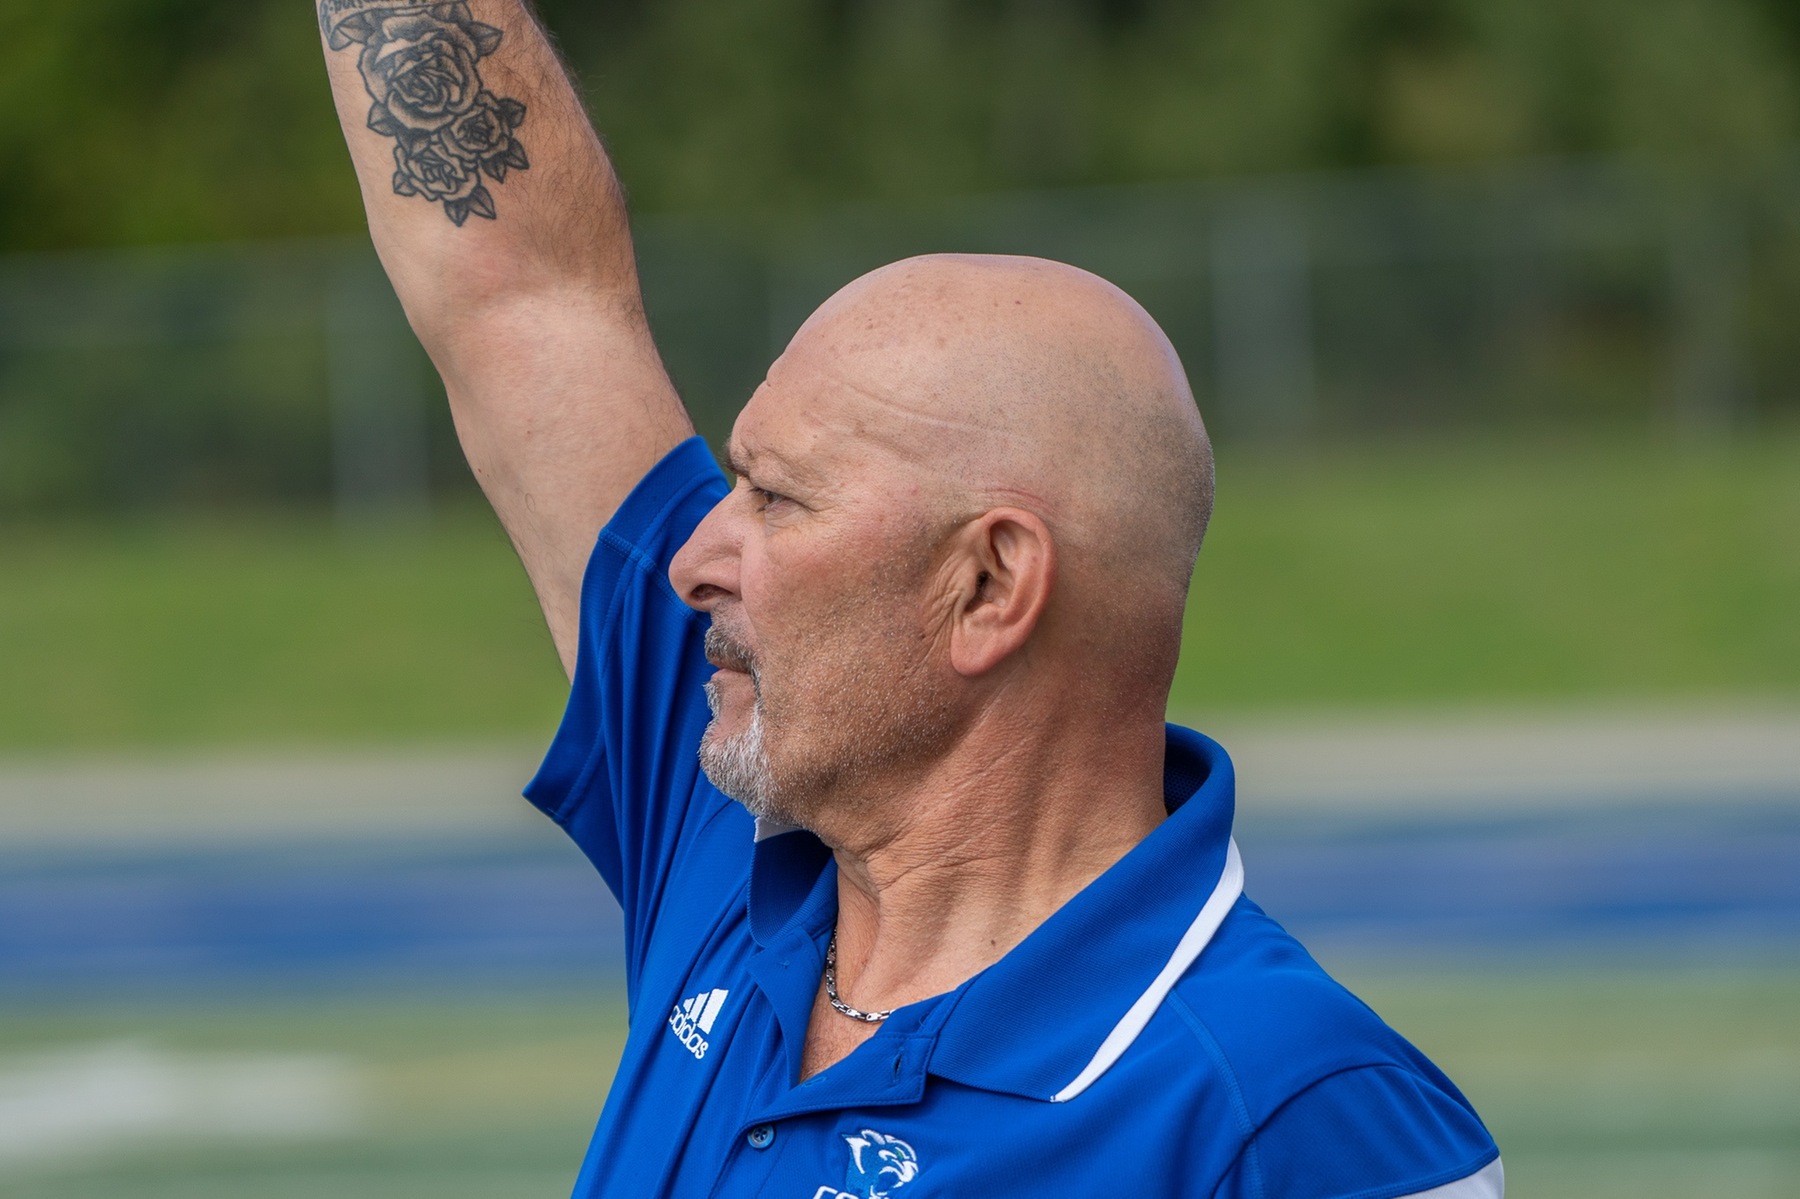 Sault Cougar's Men's Soccer Coach Steps Down